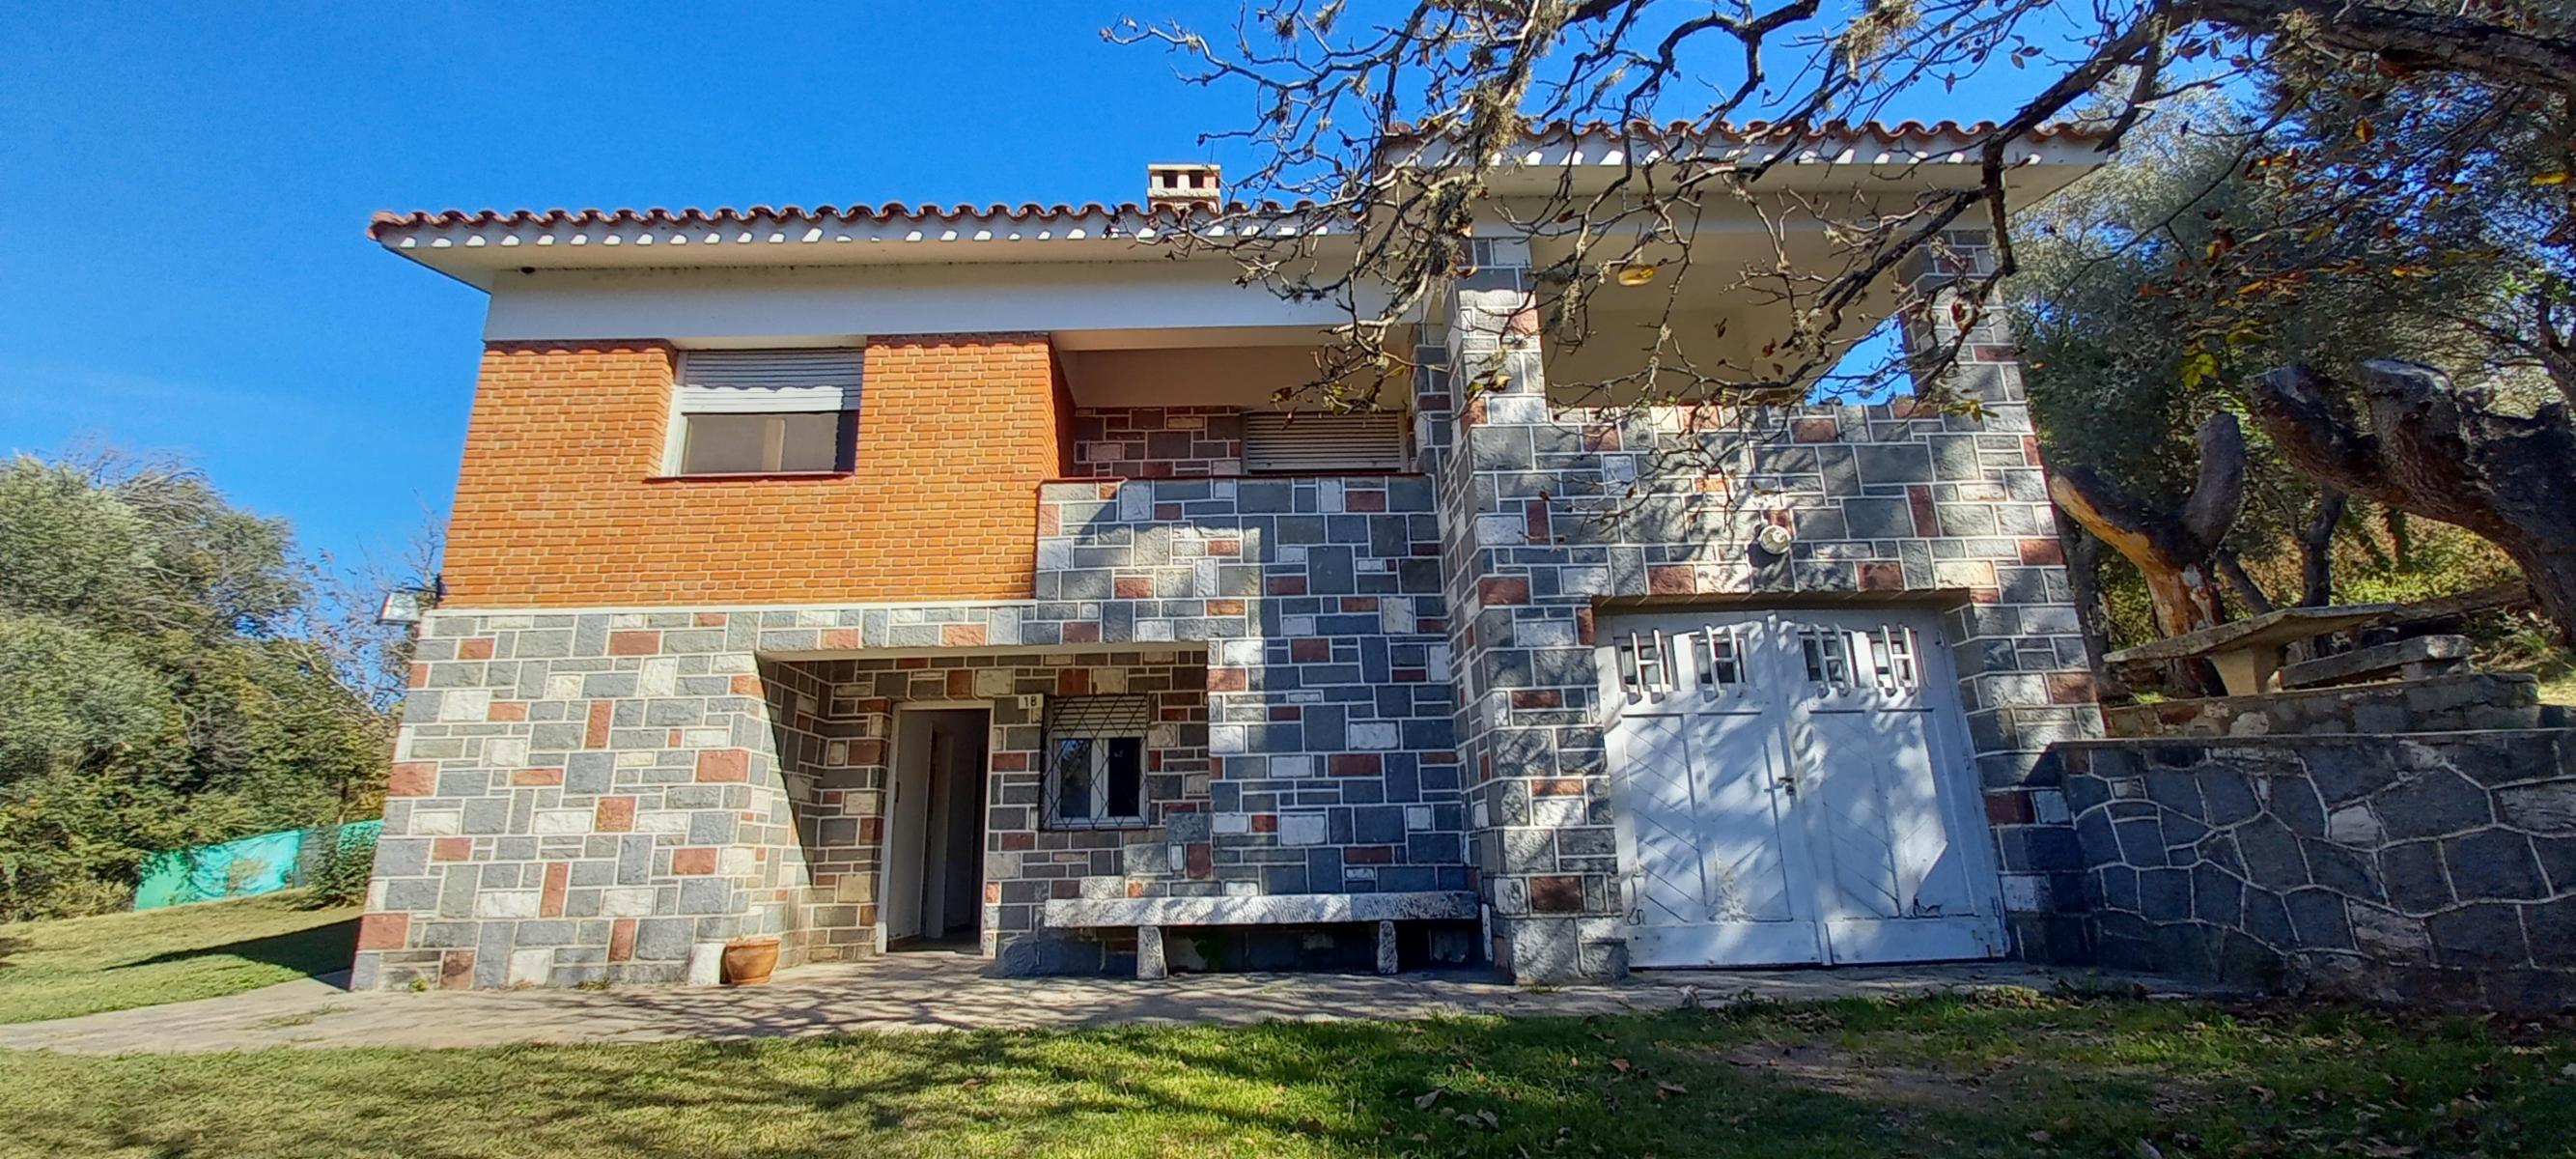 Casa de Dos Plantas + casa Parque 3150 m2 , Valle Hermoso, C�rdoba